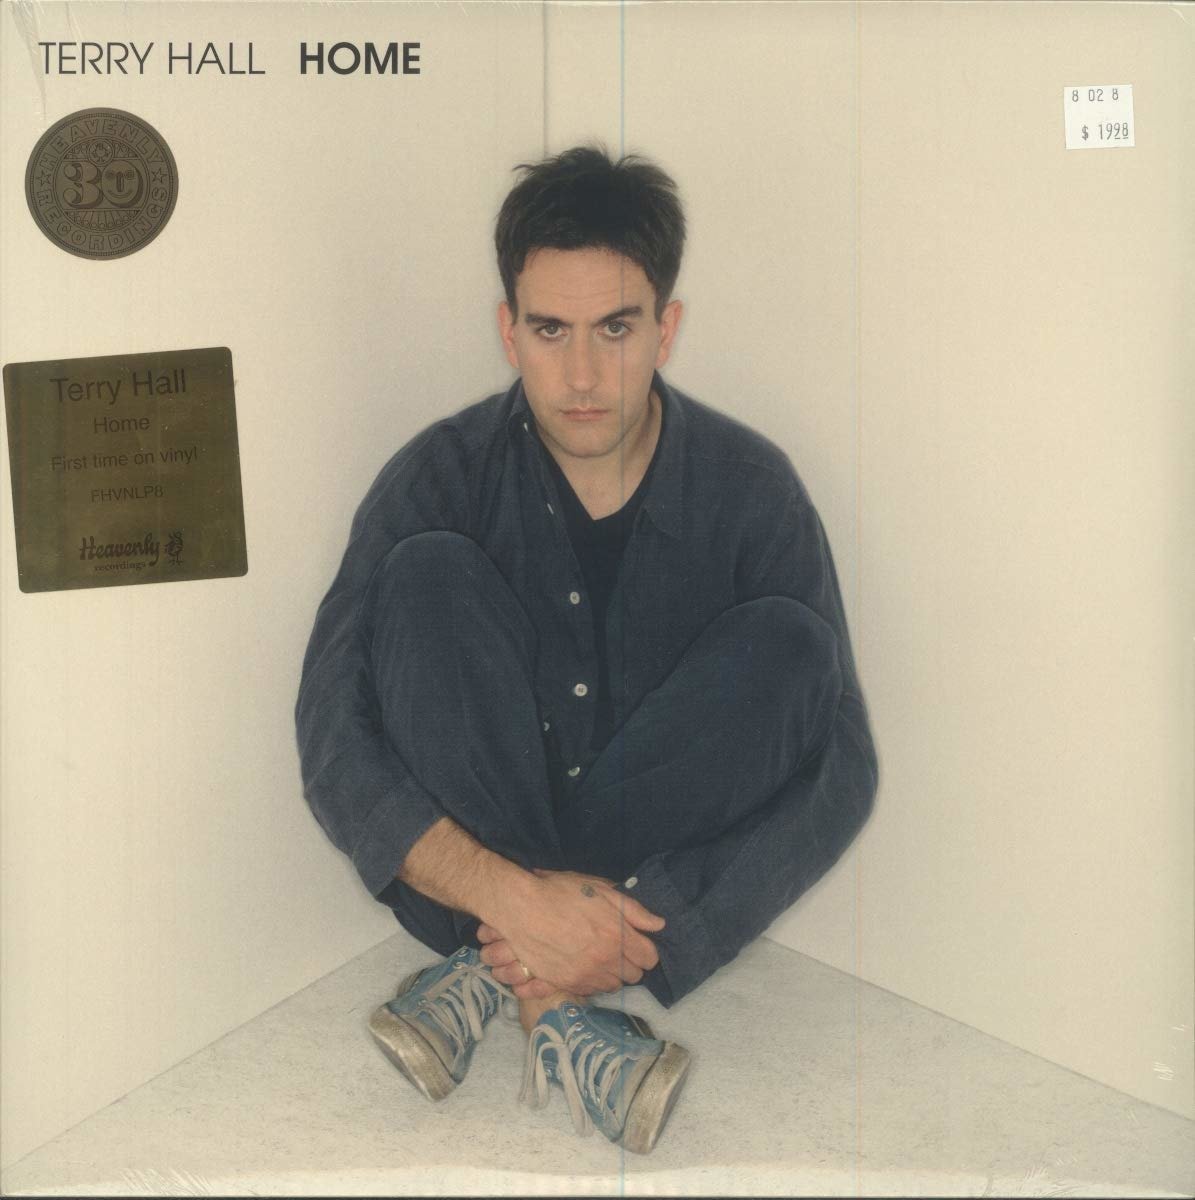 CD Shop - HALL, TERRY HOME